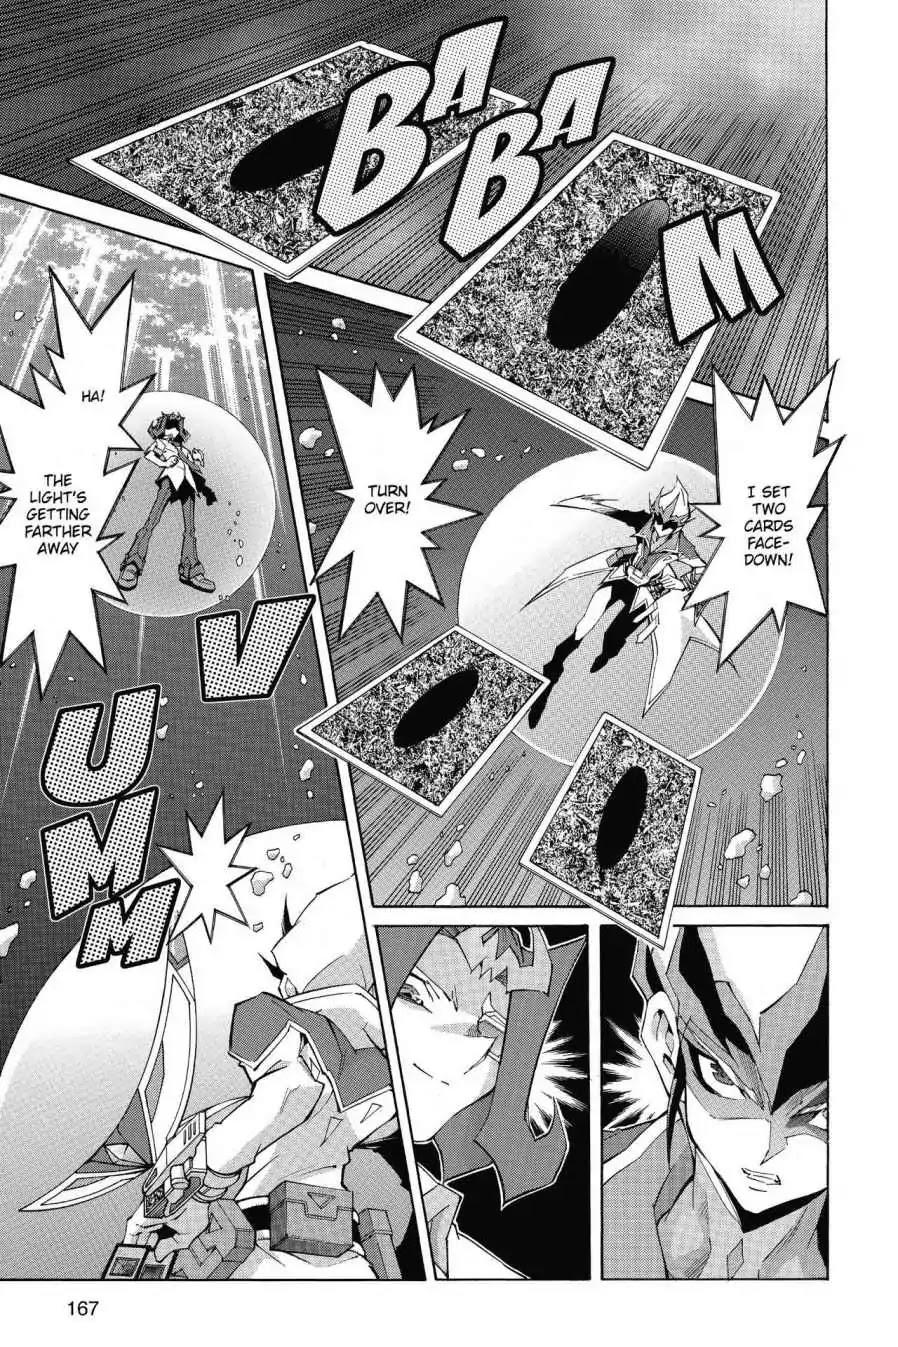 Yu-Gi-Oh! Zexal, Vol. 5 (5)